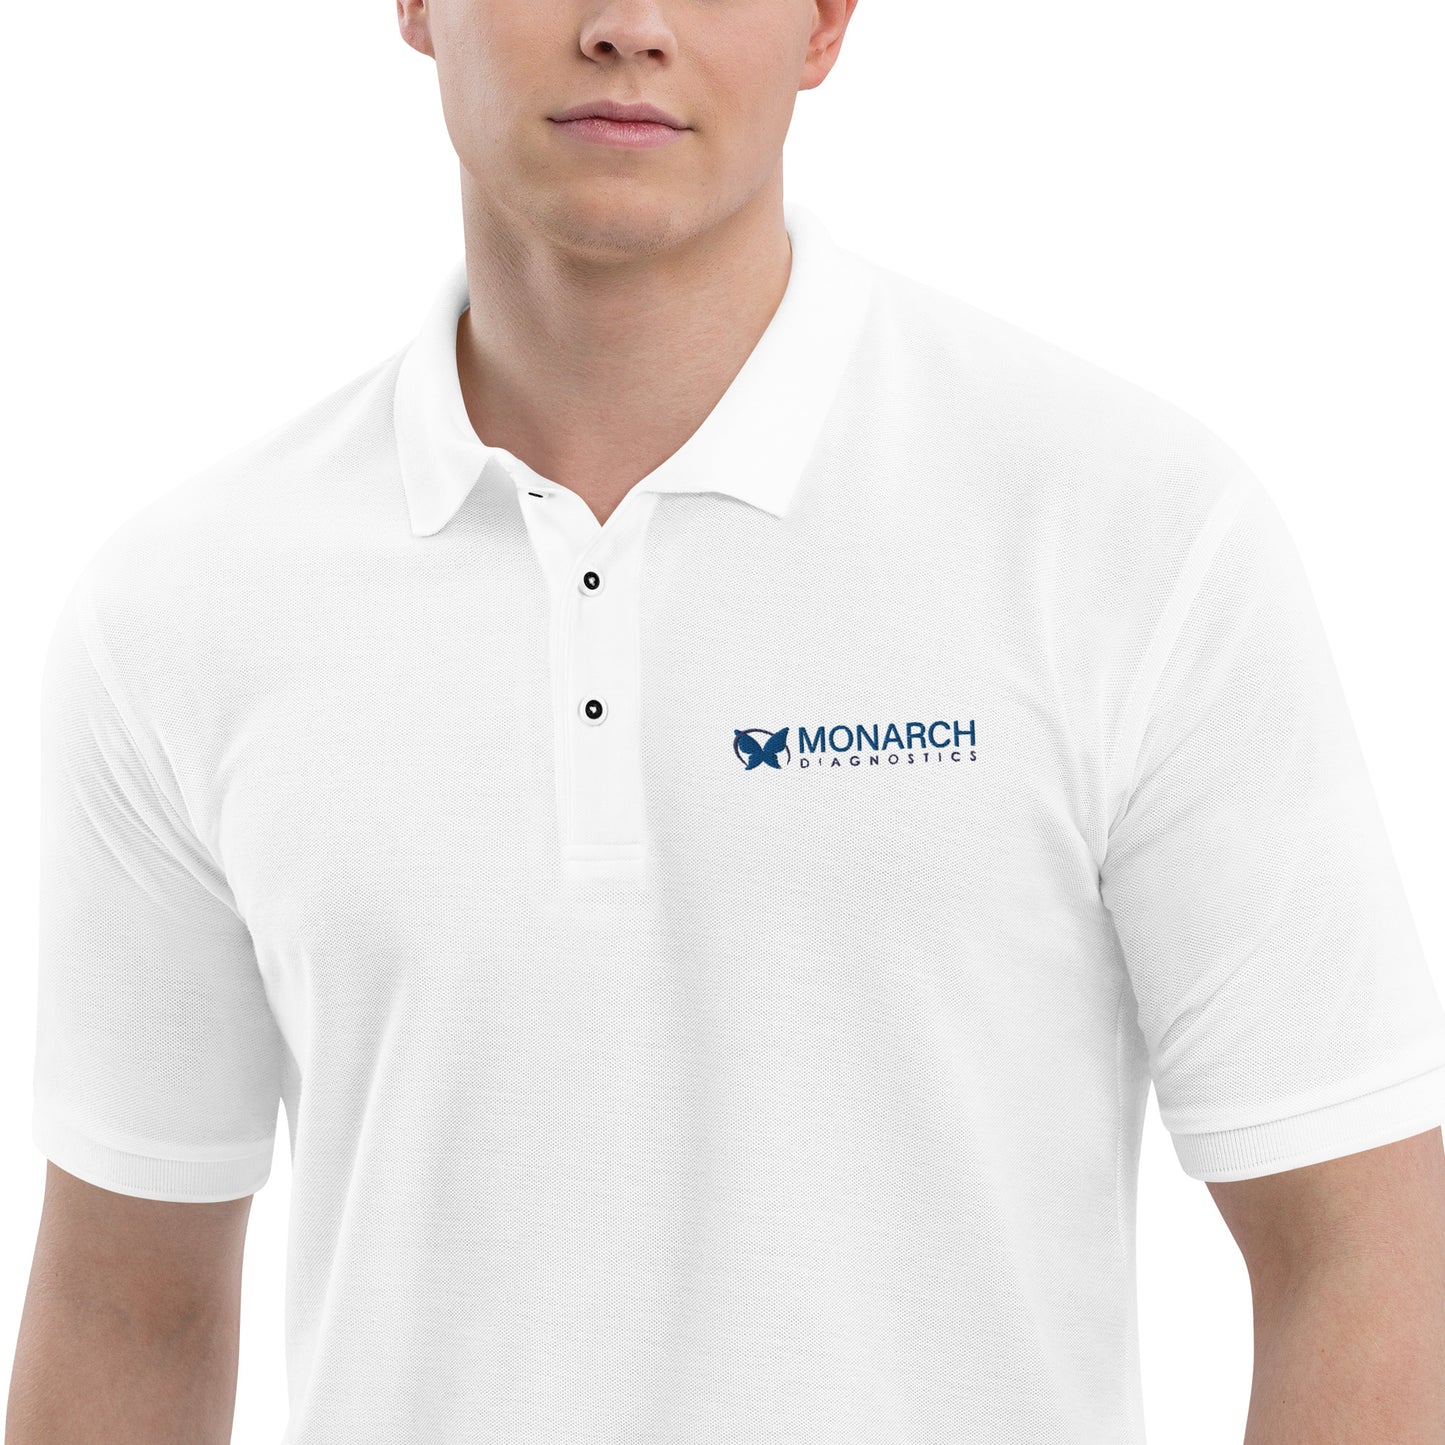 Monarch Logo - Men's Premium Polo